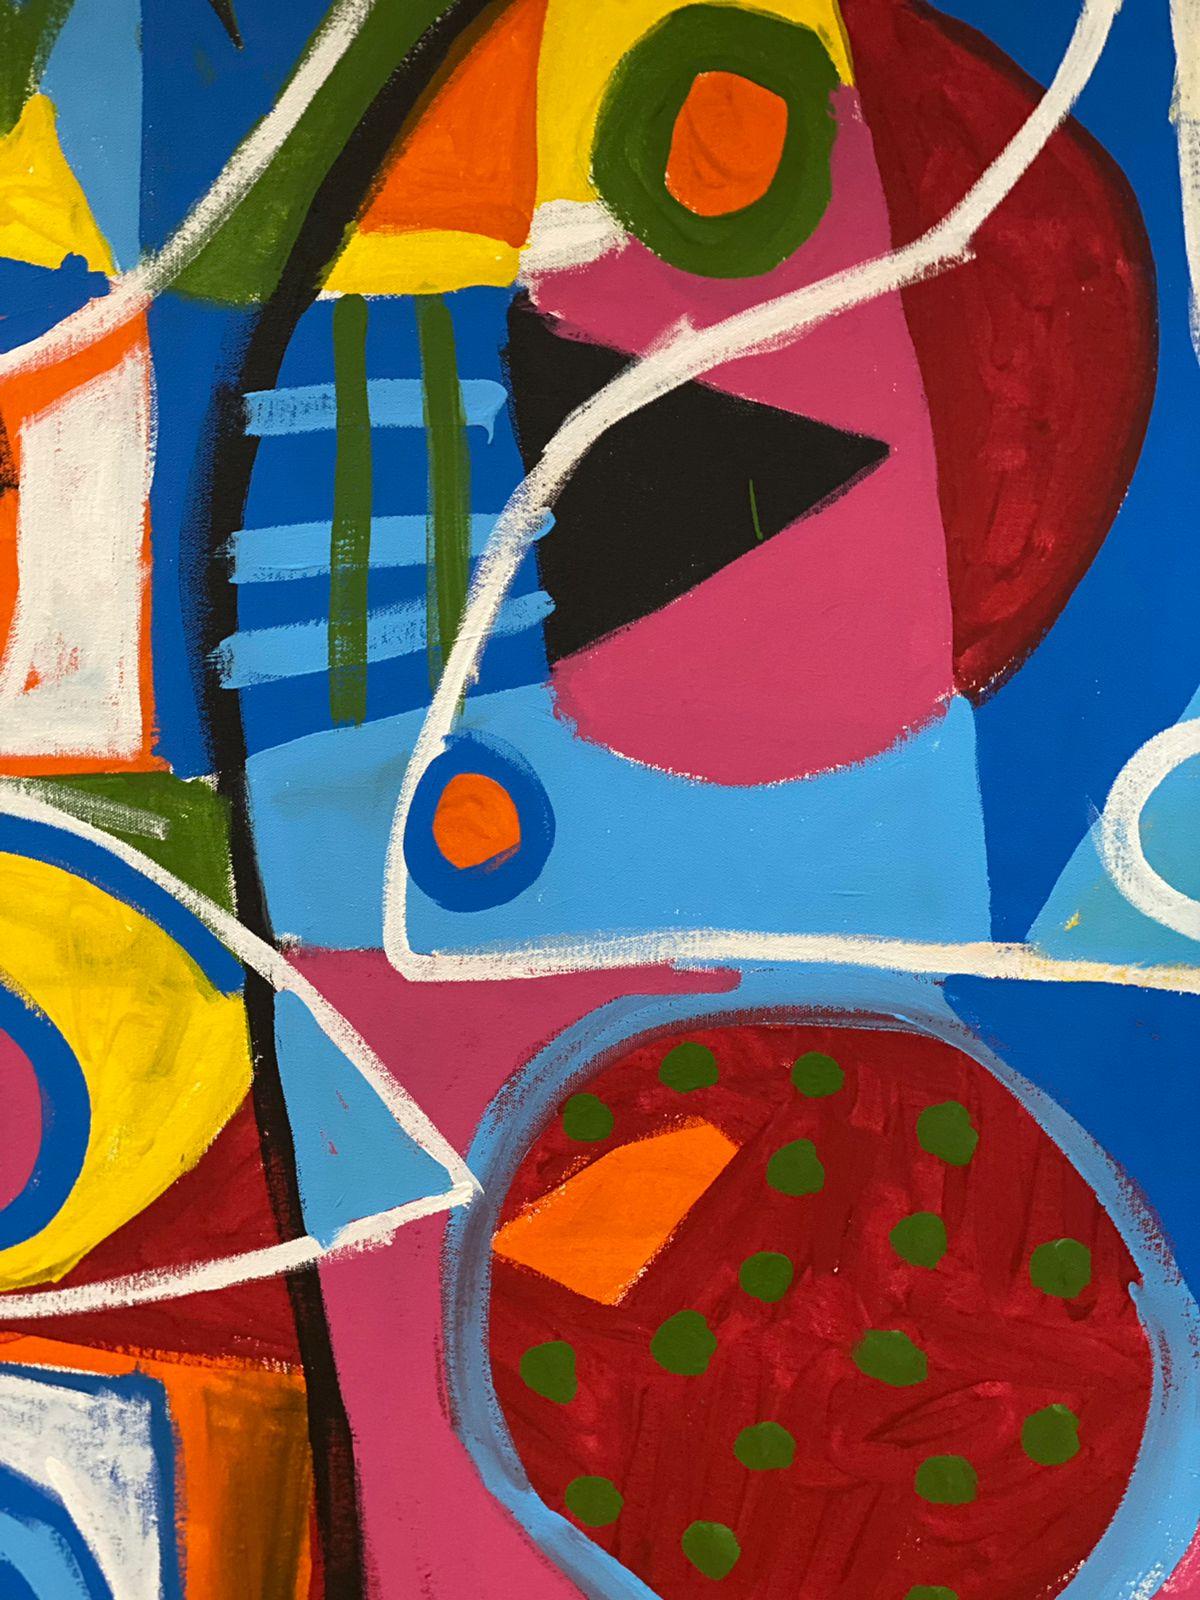 Contemporary Art, Abstract Painting
Acrylic on canvas
140x180cm
Signed 



About the artist
Enrique Pichardo (Mexico City, 1973) graduated from Escuela Nacional de Pintura, Escultura y Grabado (ENPEG) “La Esmeralda”. As a Mexican Contemporary